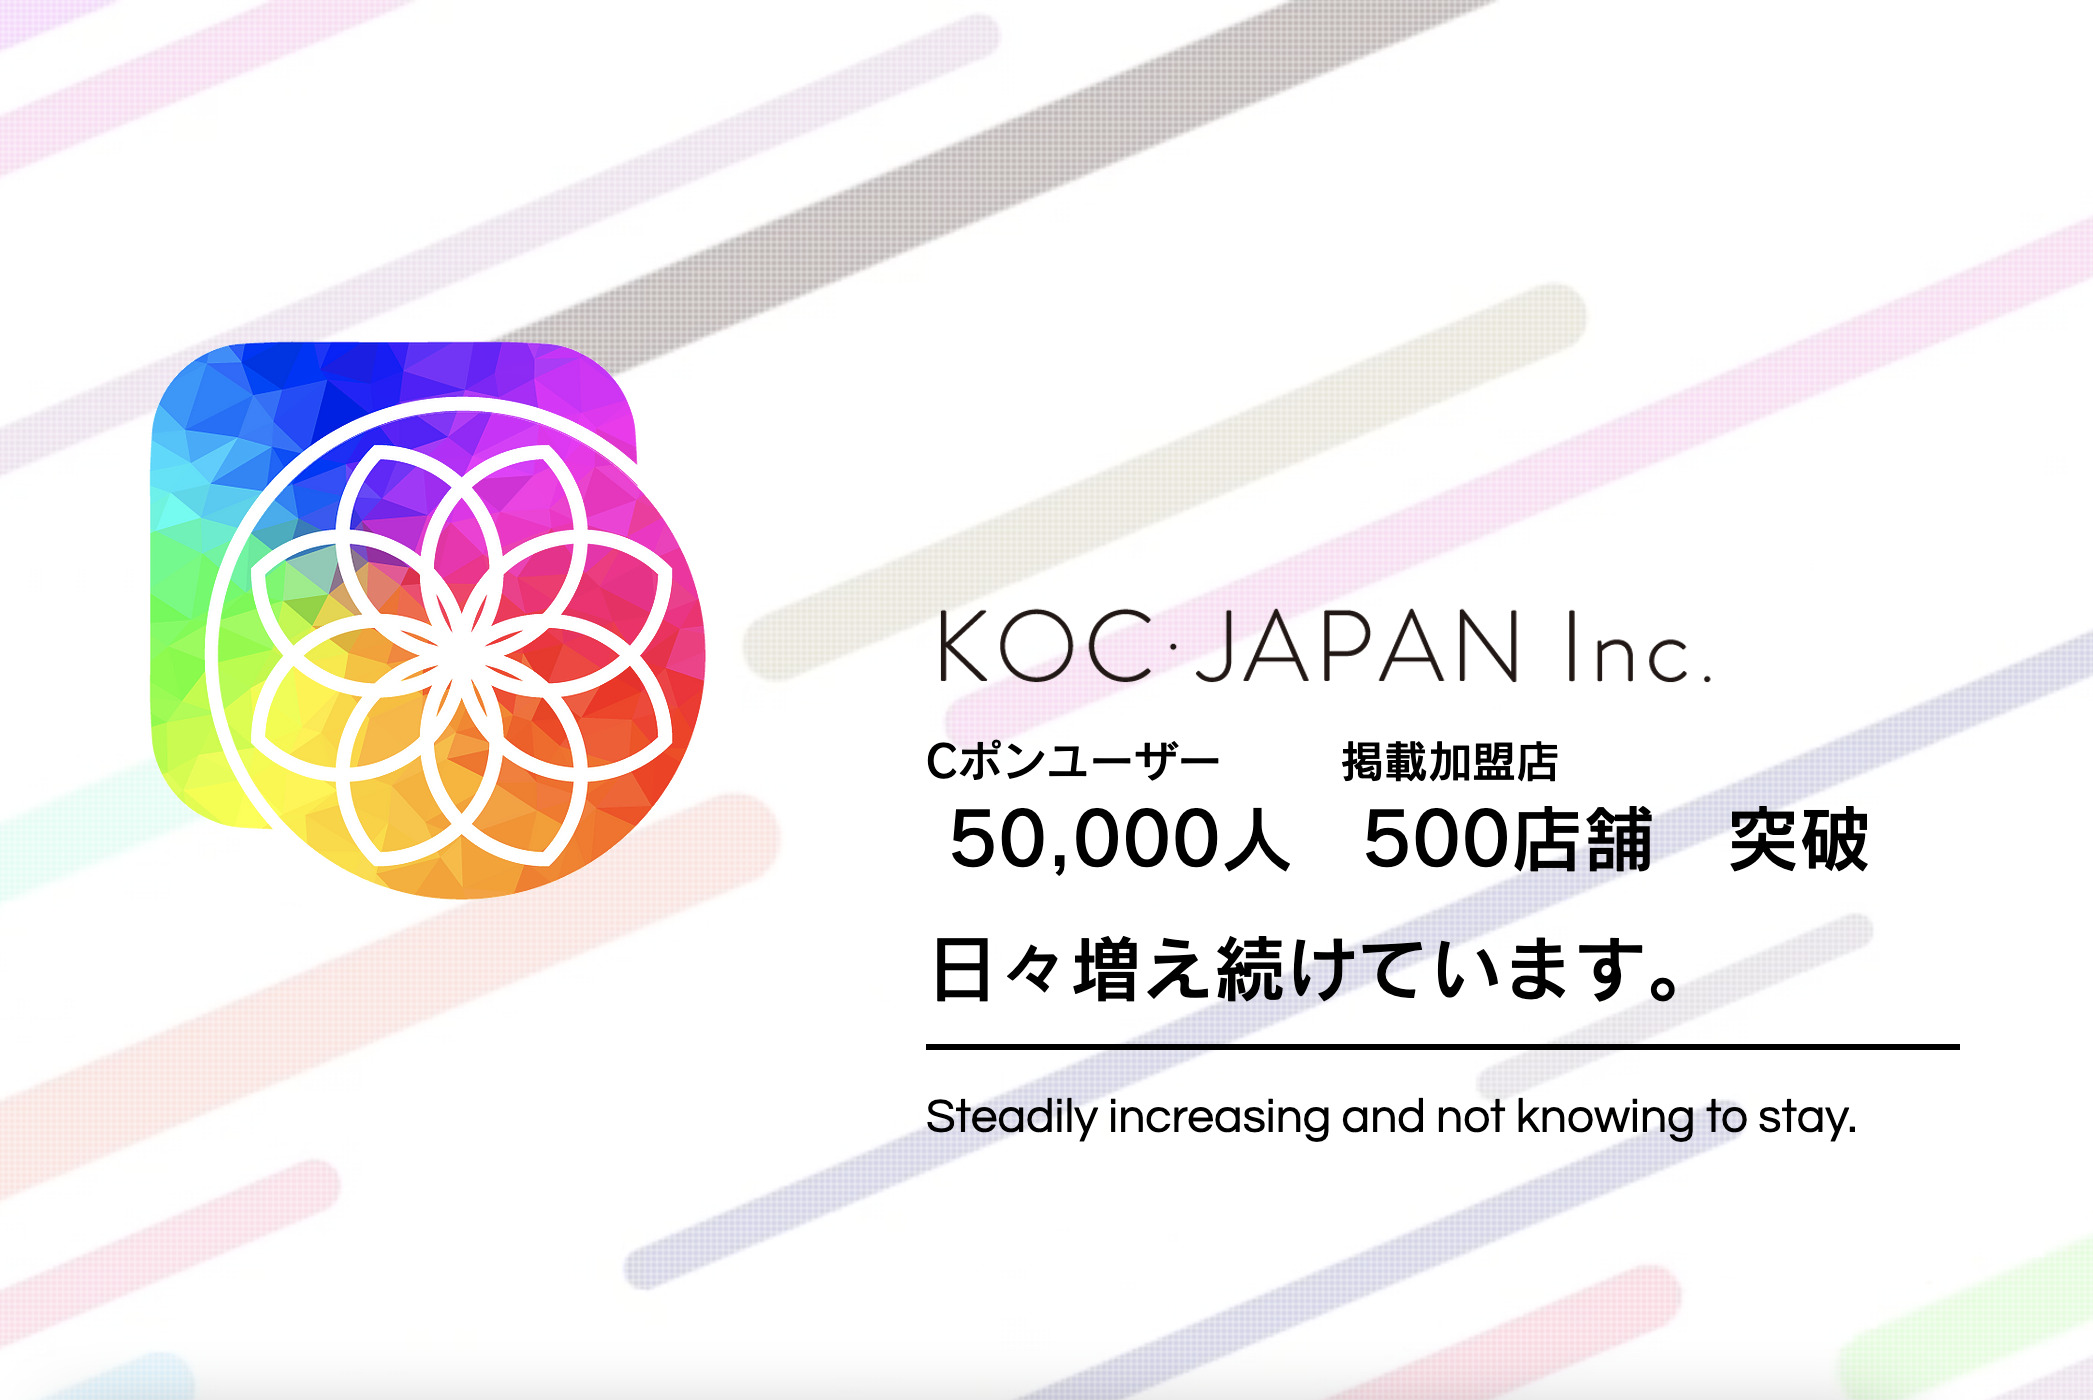 KOC・JAPAN 株式会社との業務提携締結のご報告